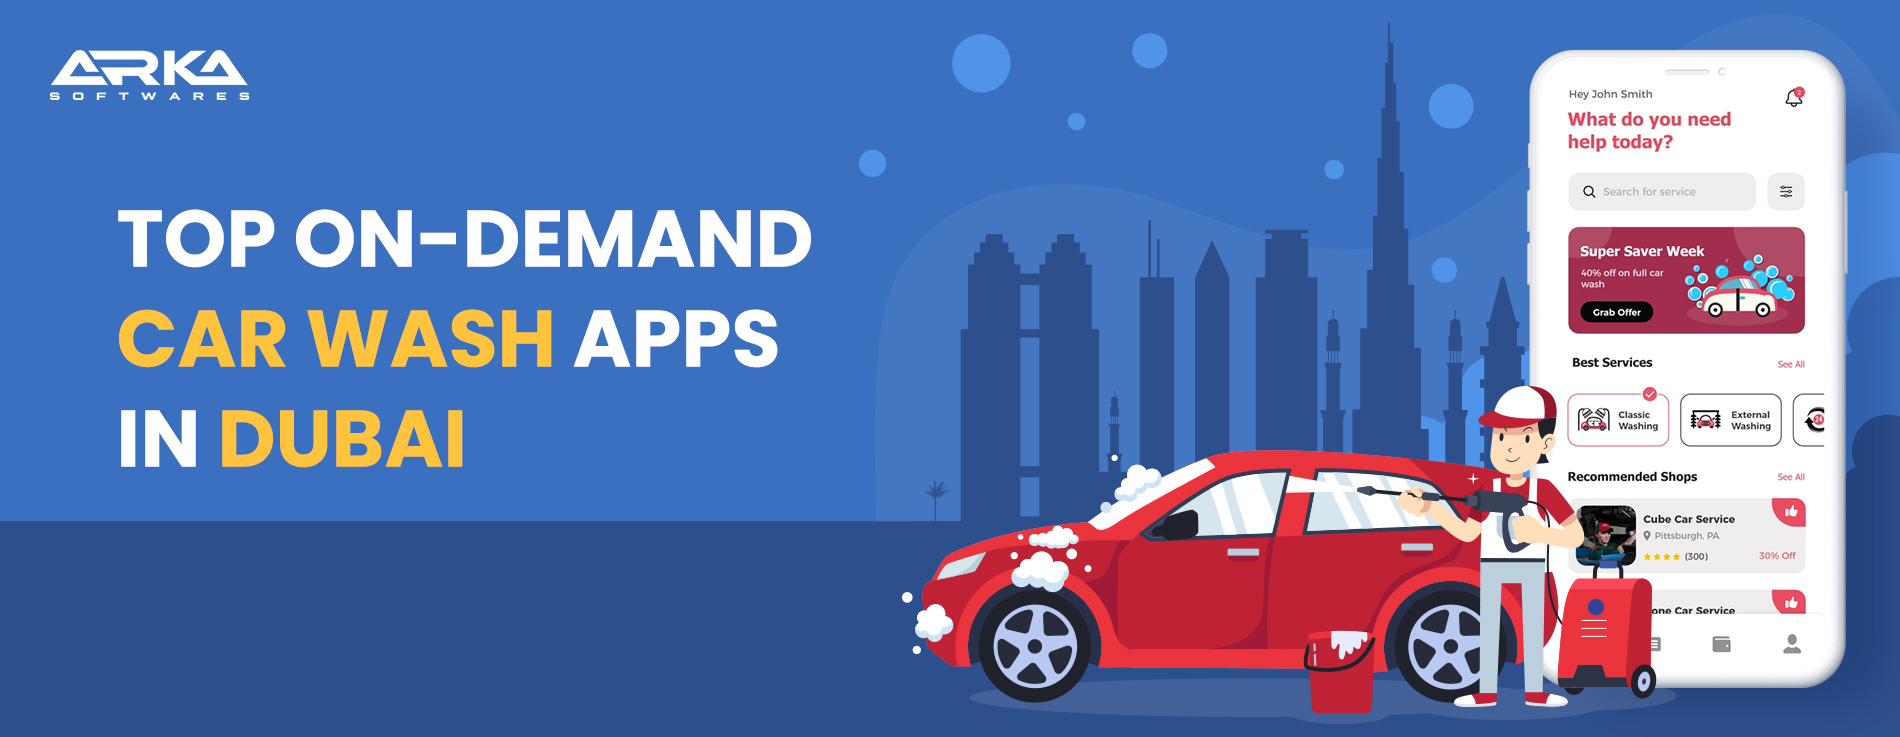 Top On-Demand Car Wash Apps in Dubai